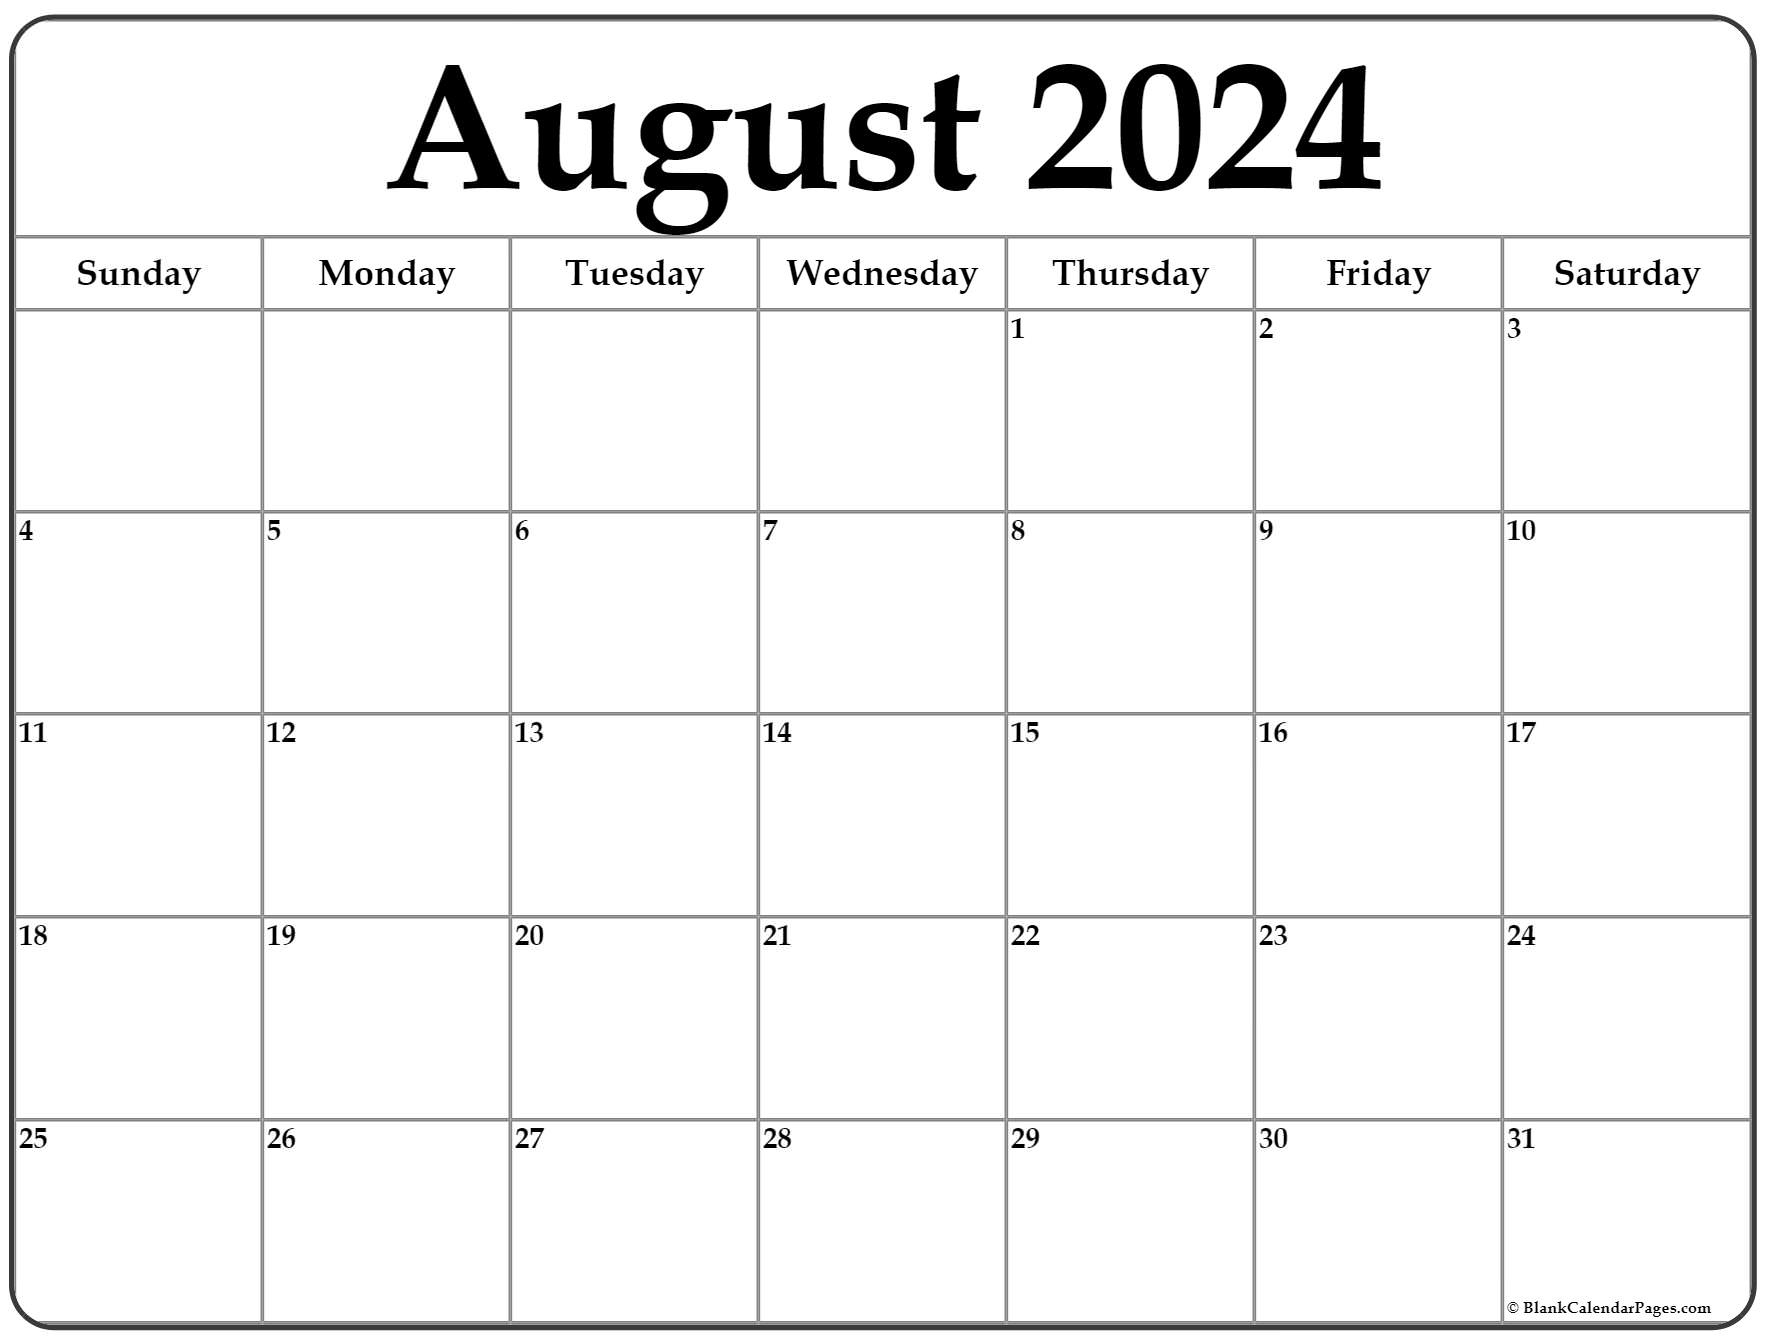 August 2024 Calendar | Free Printable Calendar inside Free Printable August 2024 Calendar Word